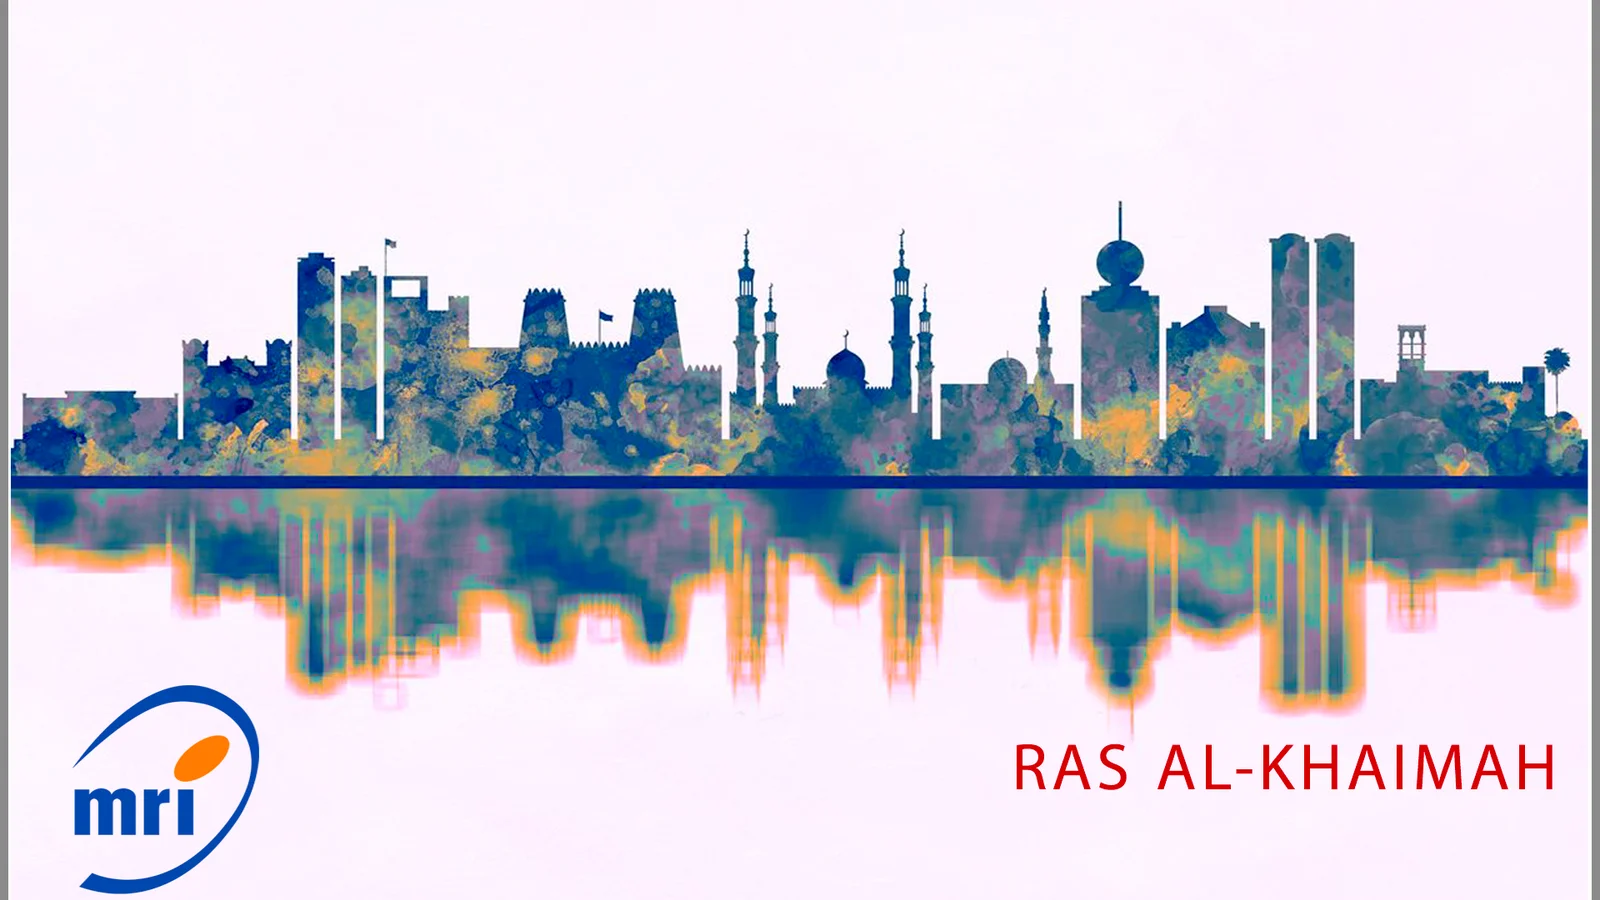 Moores Rowland – Ras Al Khaimah